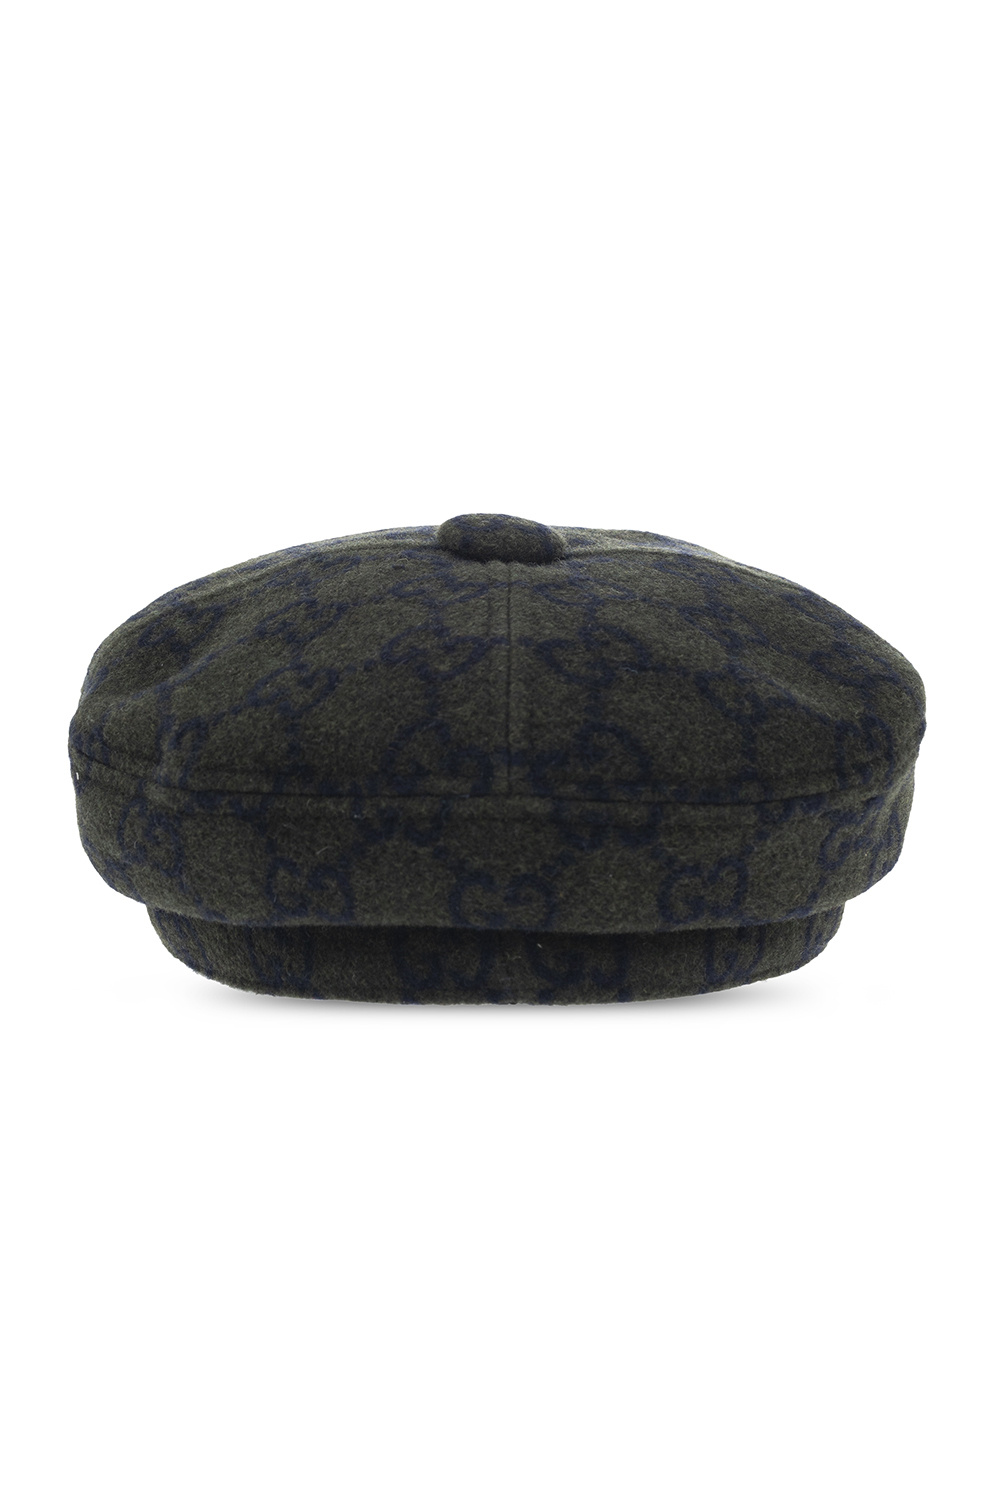 LOUIS VUITTON Monogram Beanie Hat Cap LV Logo Black & Gray Wool Sz S  Fitted Cap